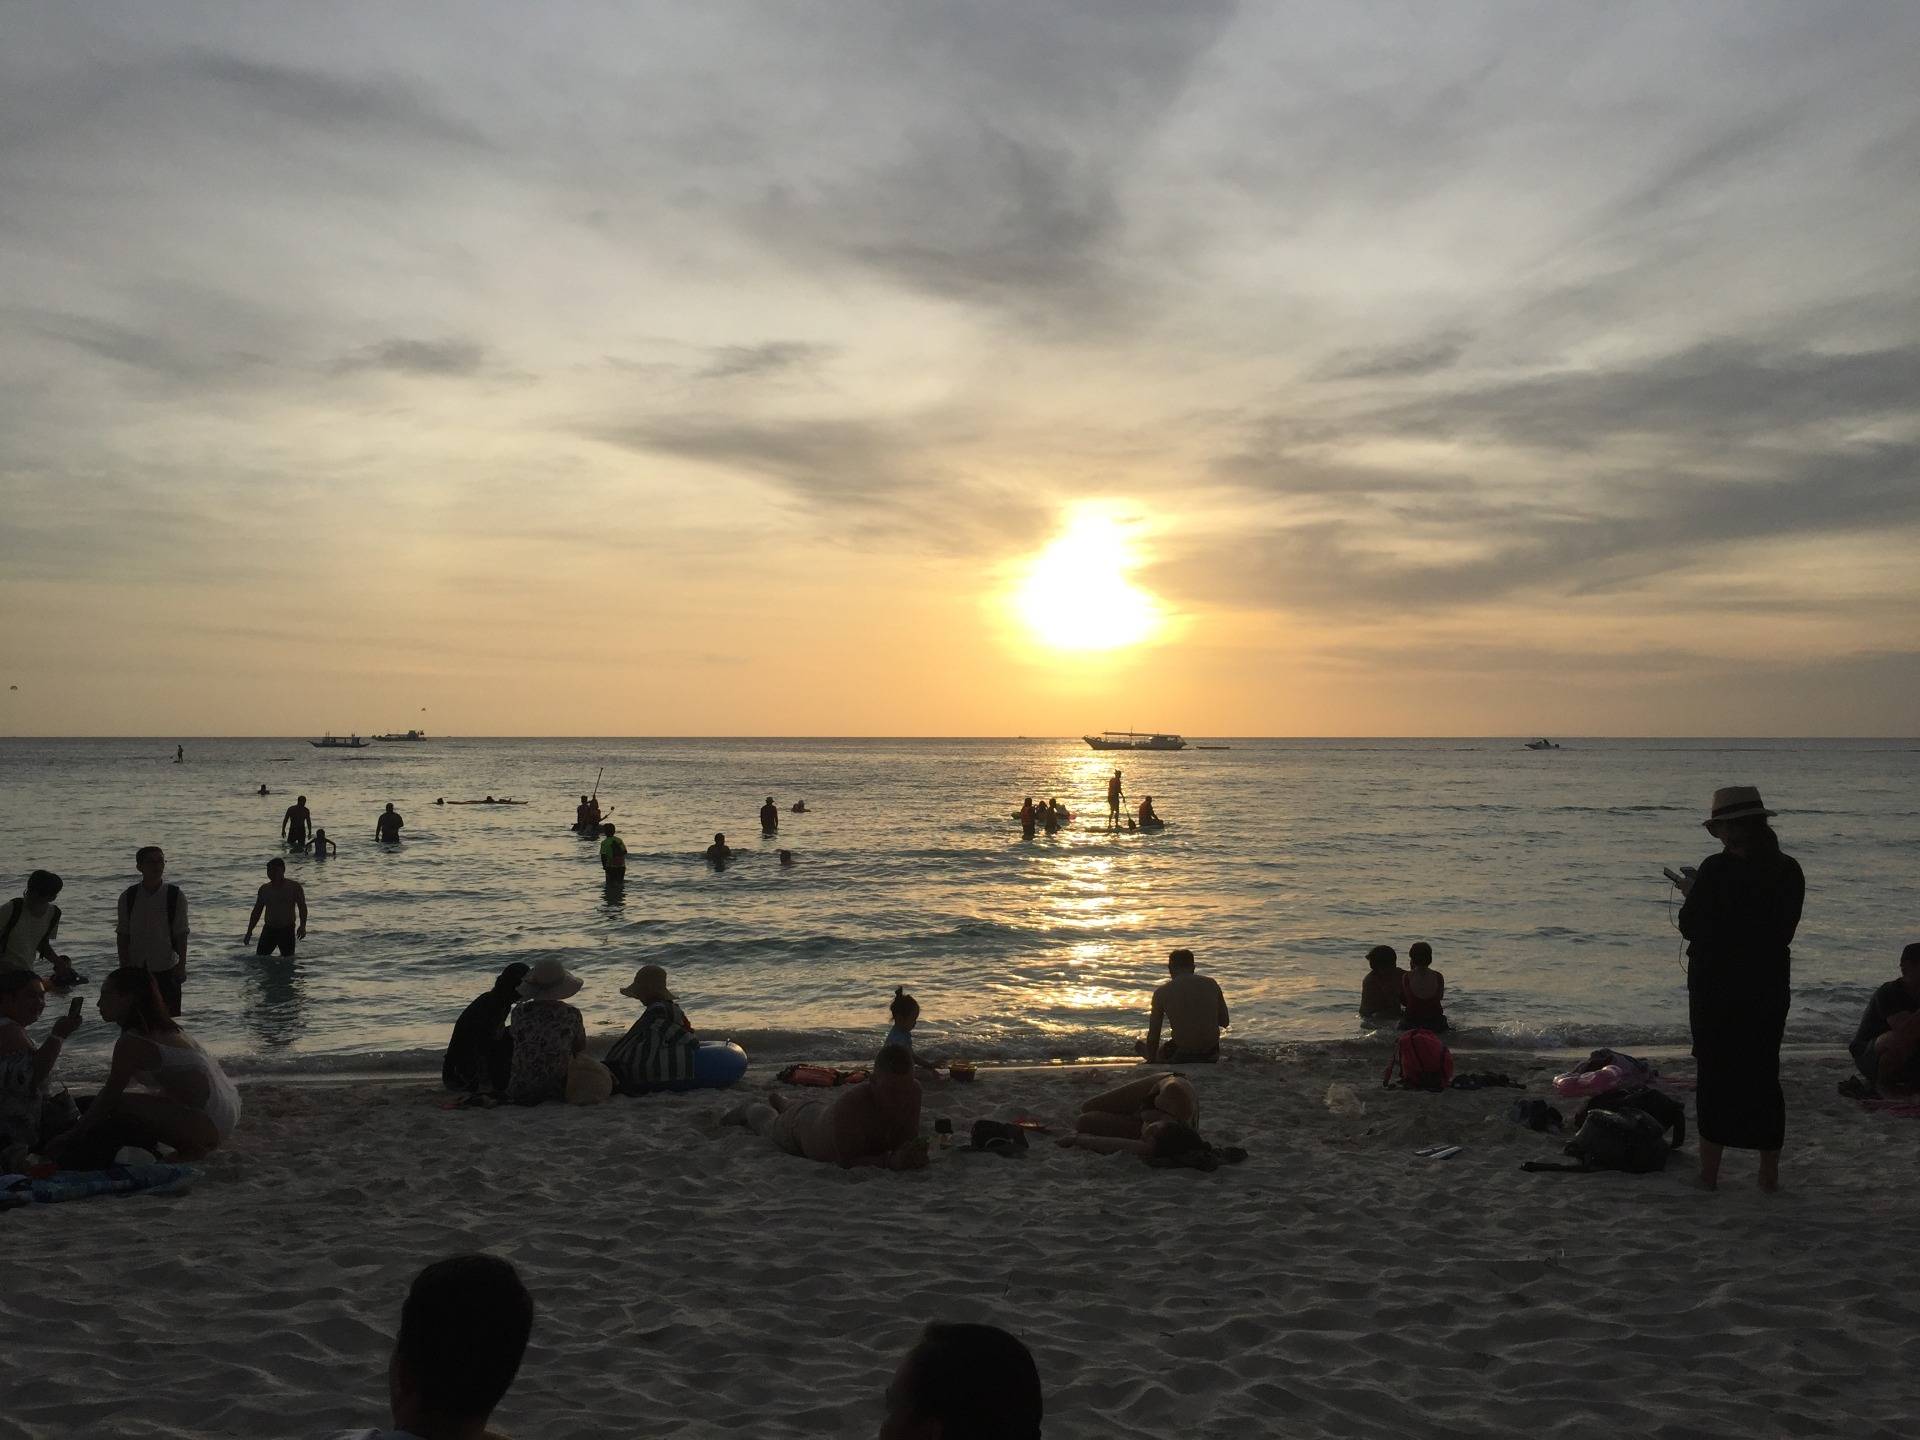 Beautiful sunset with the Boracay tourists